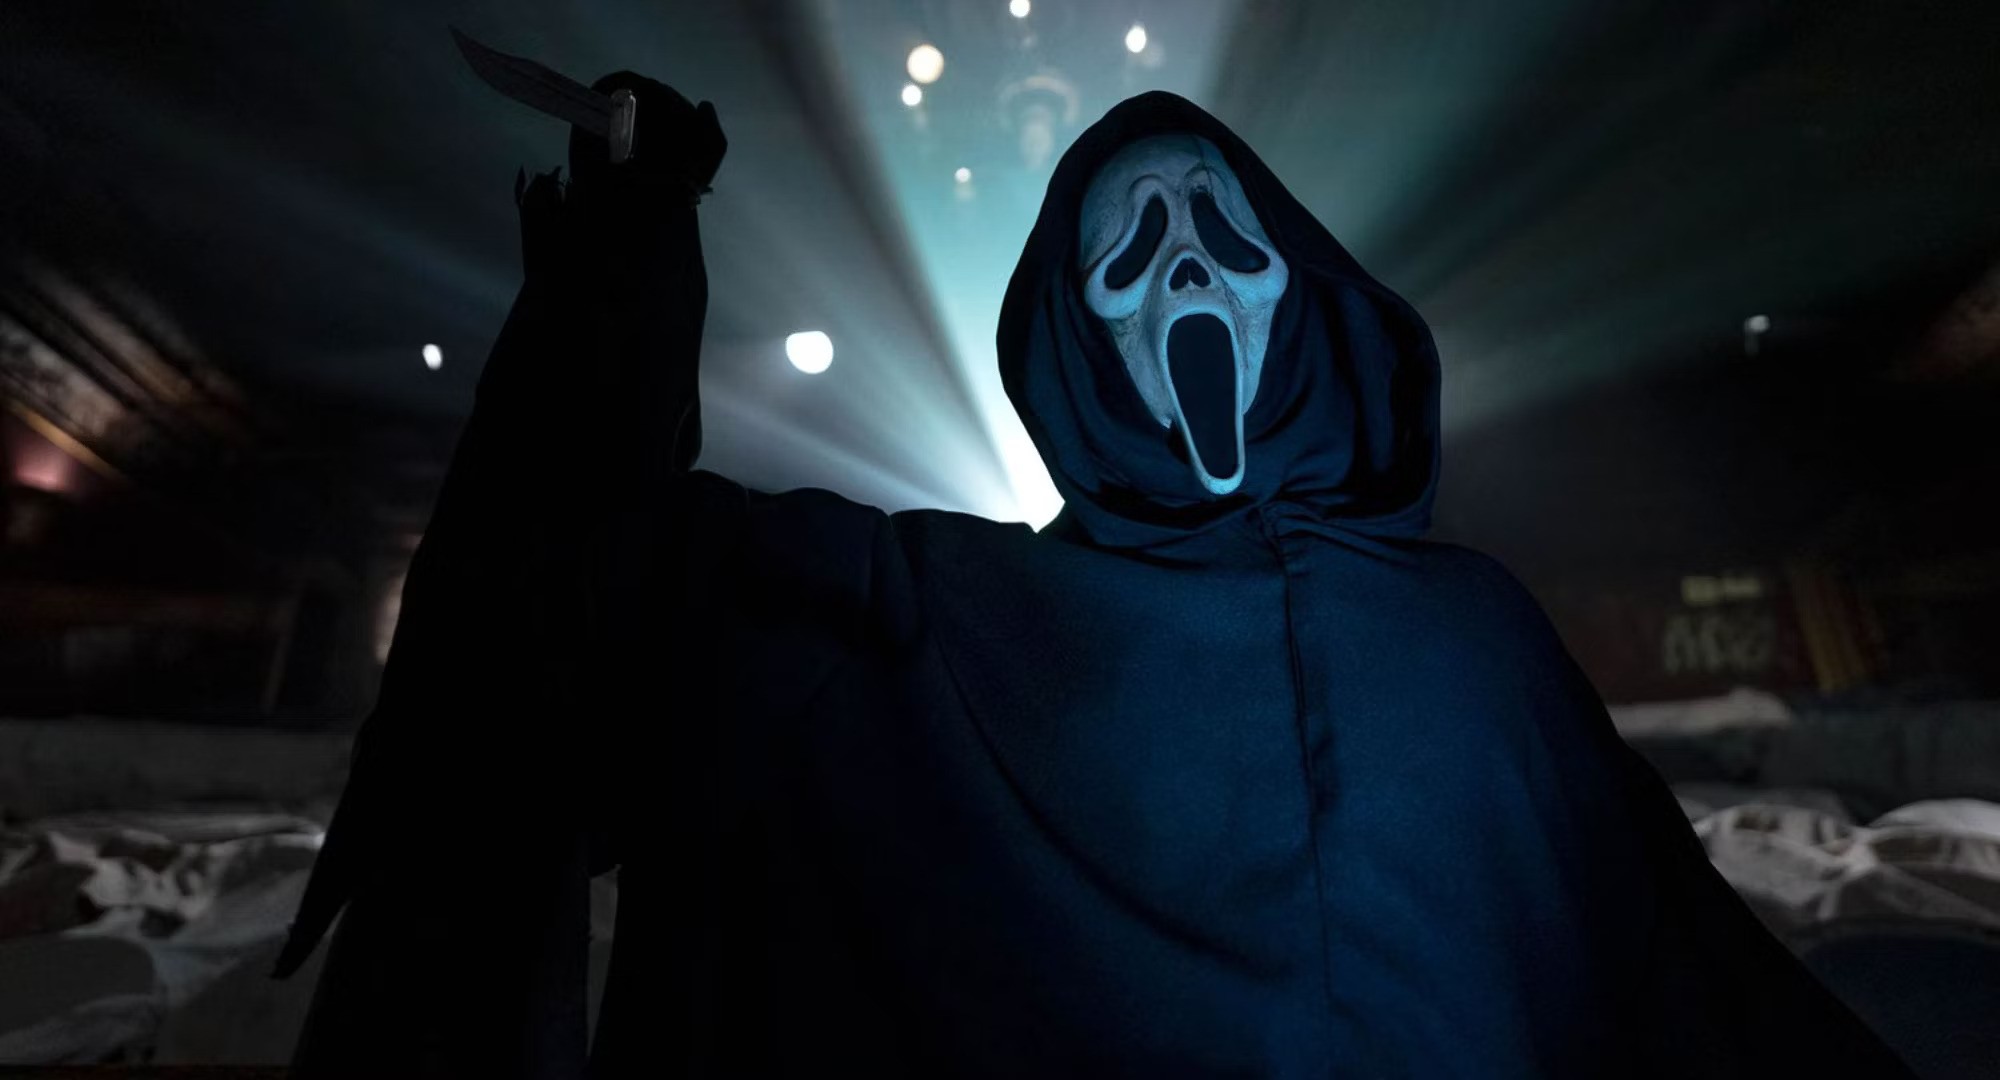 ghostface-killer-scream-17005